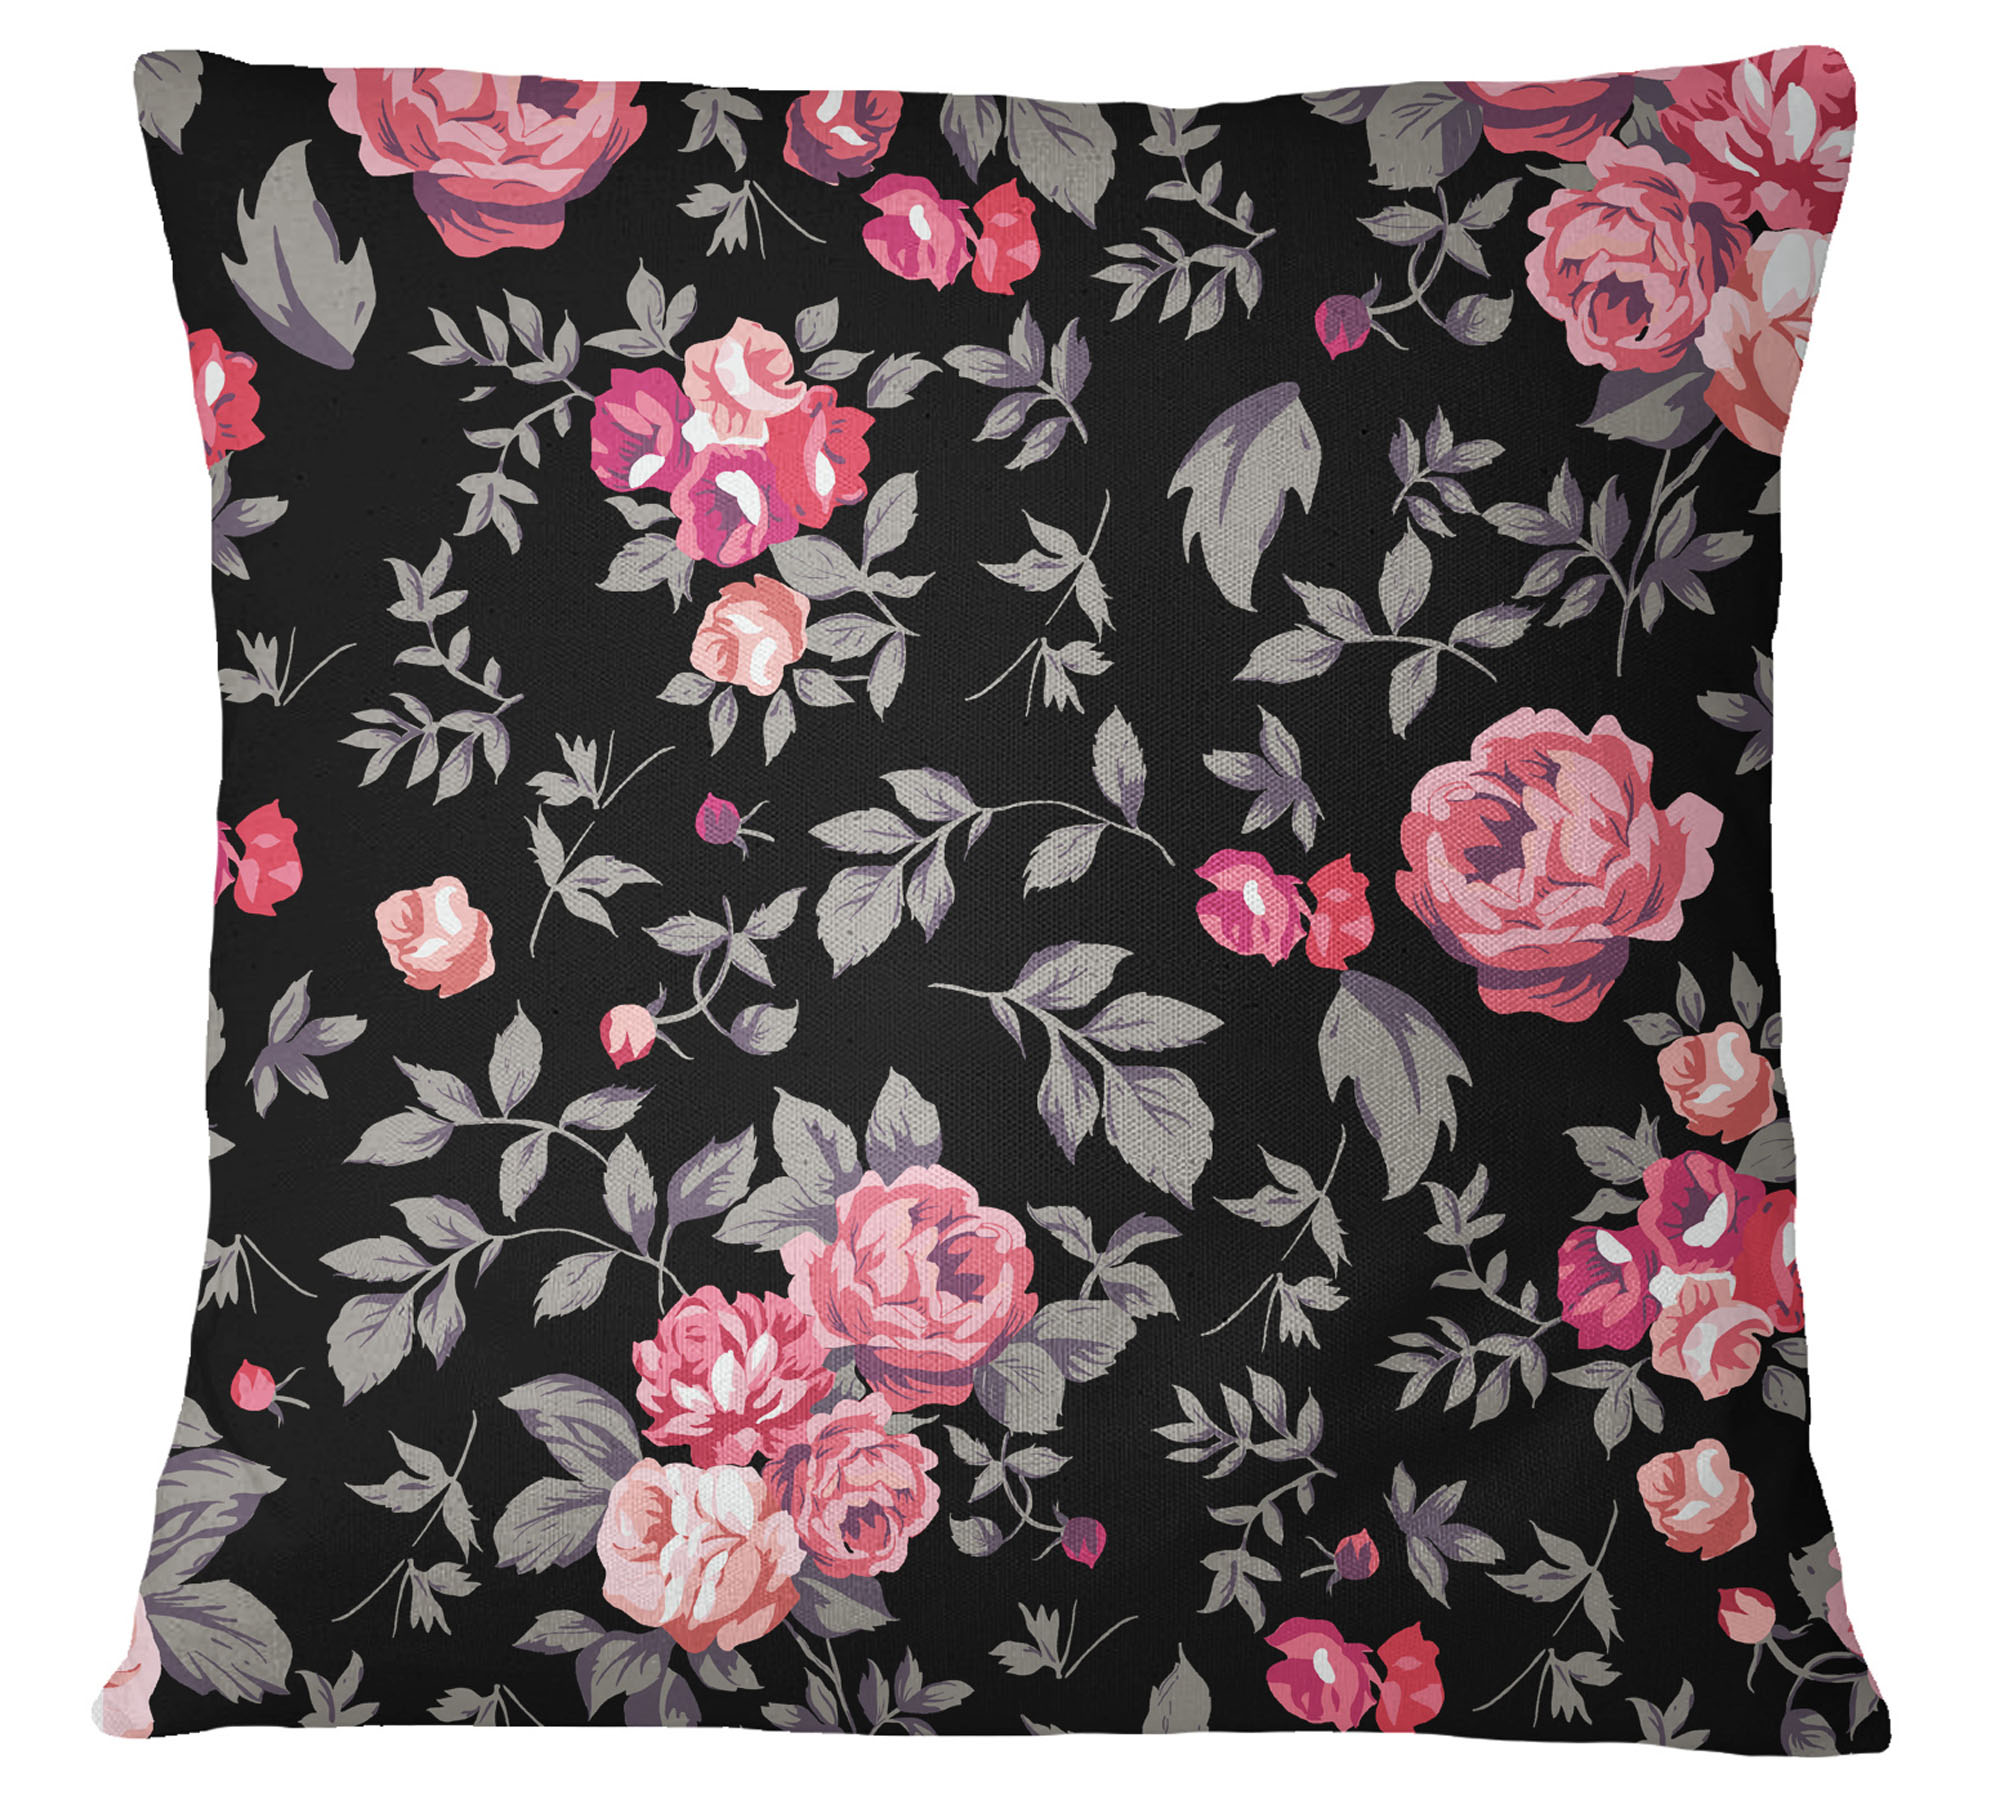 Details about   S4Sassy Floral  Print Cotton Poplin Home Décor 1 Pair Pillow Sham Cushion Cover 